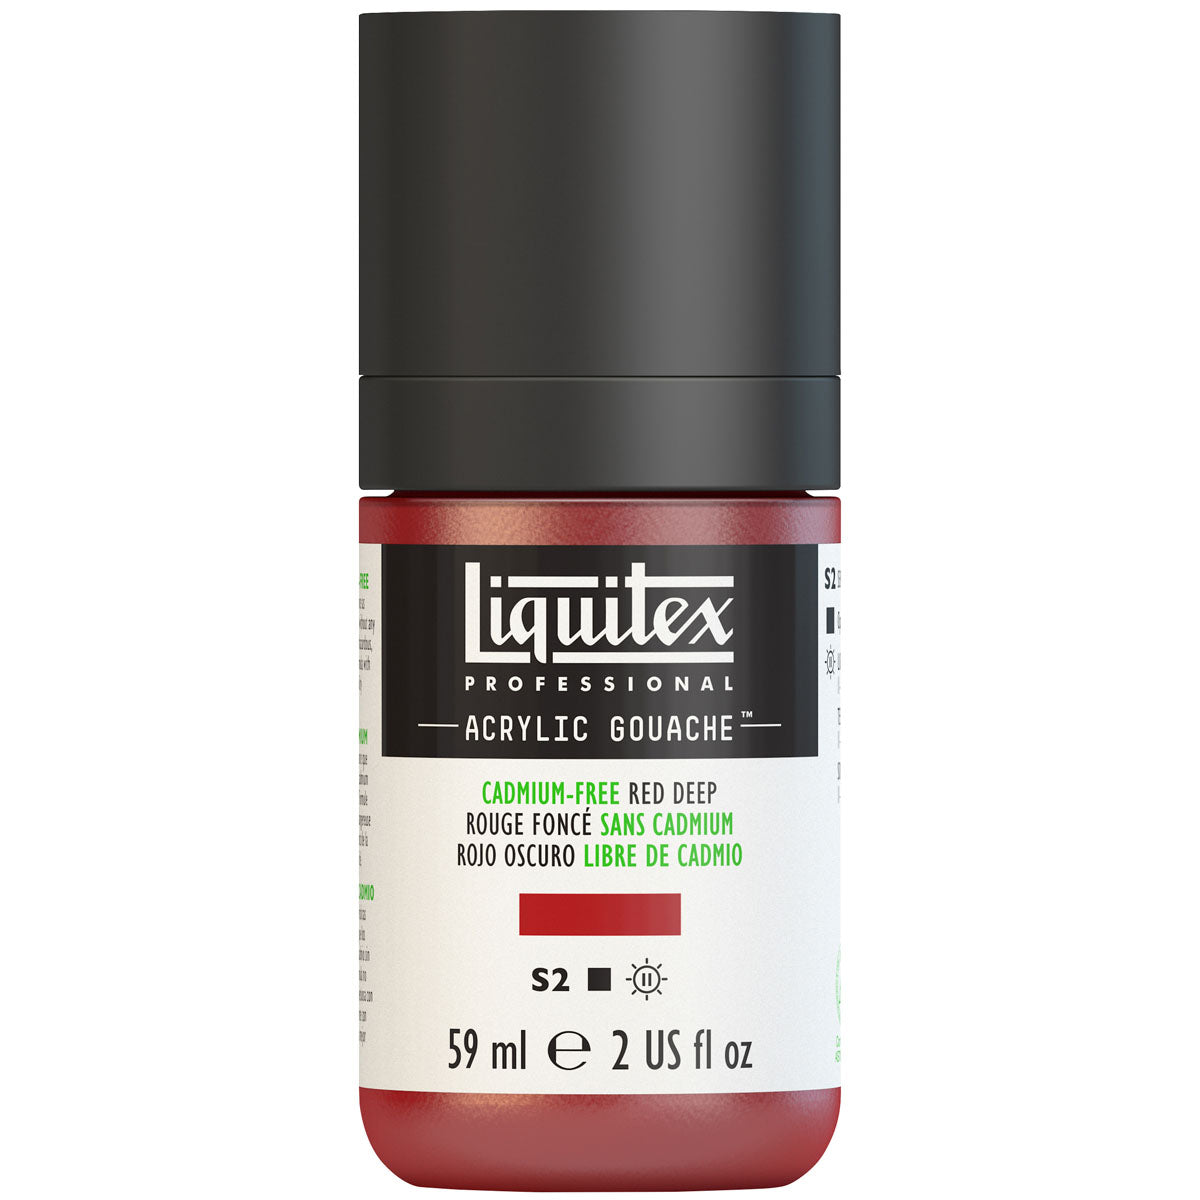 Liquitex - Acrylic Gouache 59ml S2 - Cadimum-Free Red Deep